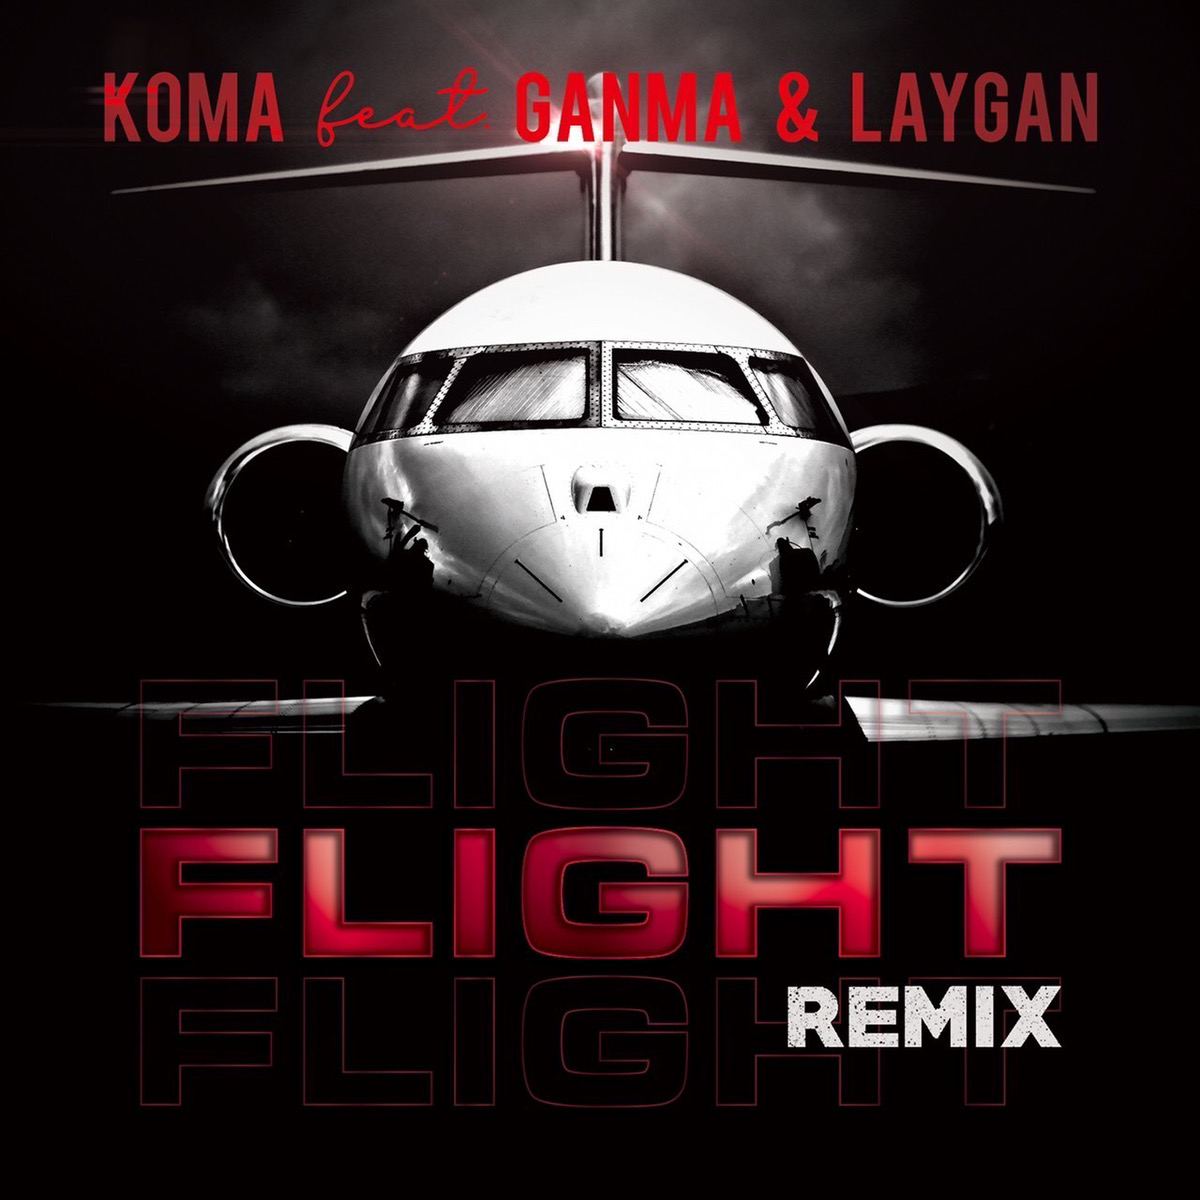 FLIGHT (REMIX) KOMA feat. GANMA & LAYGAN